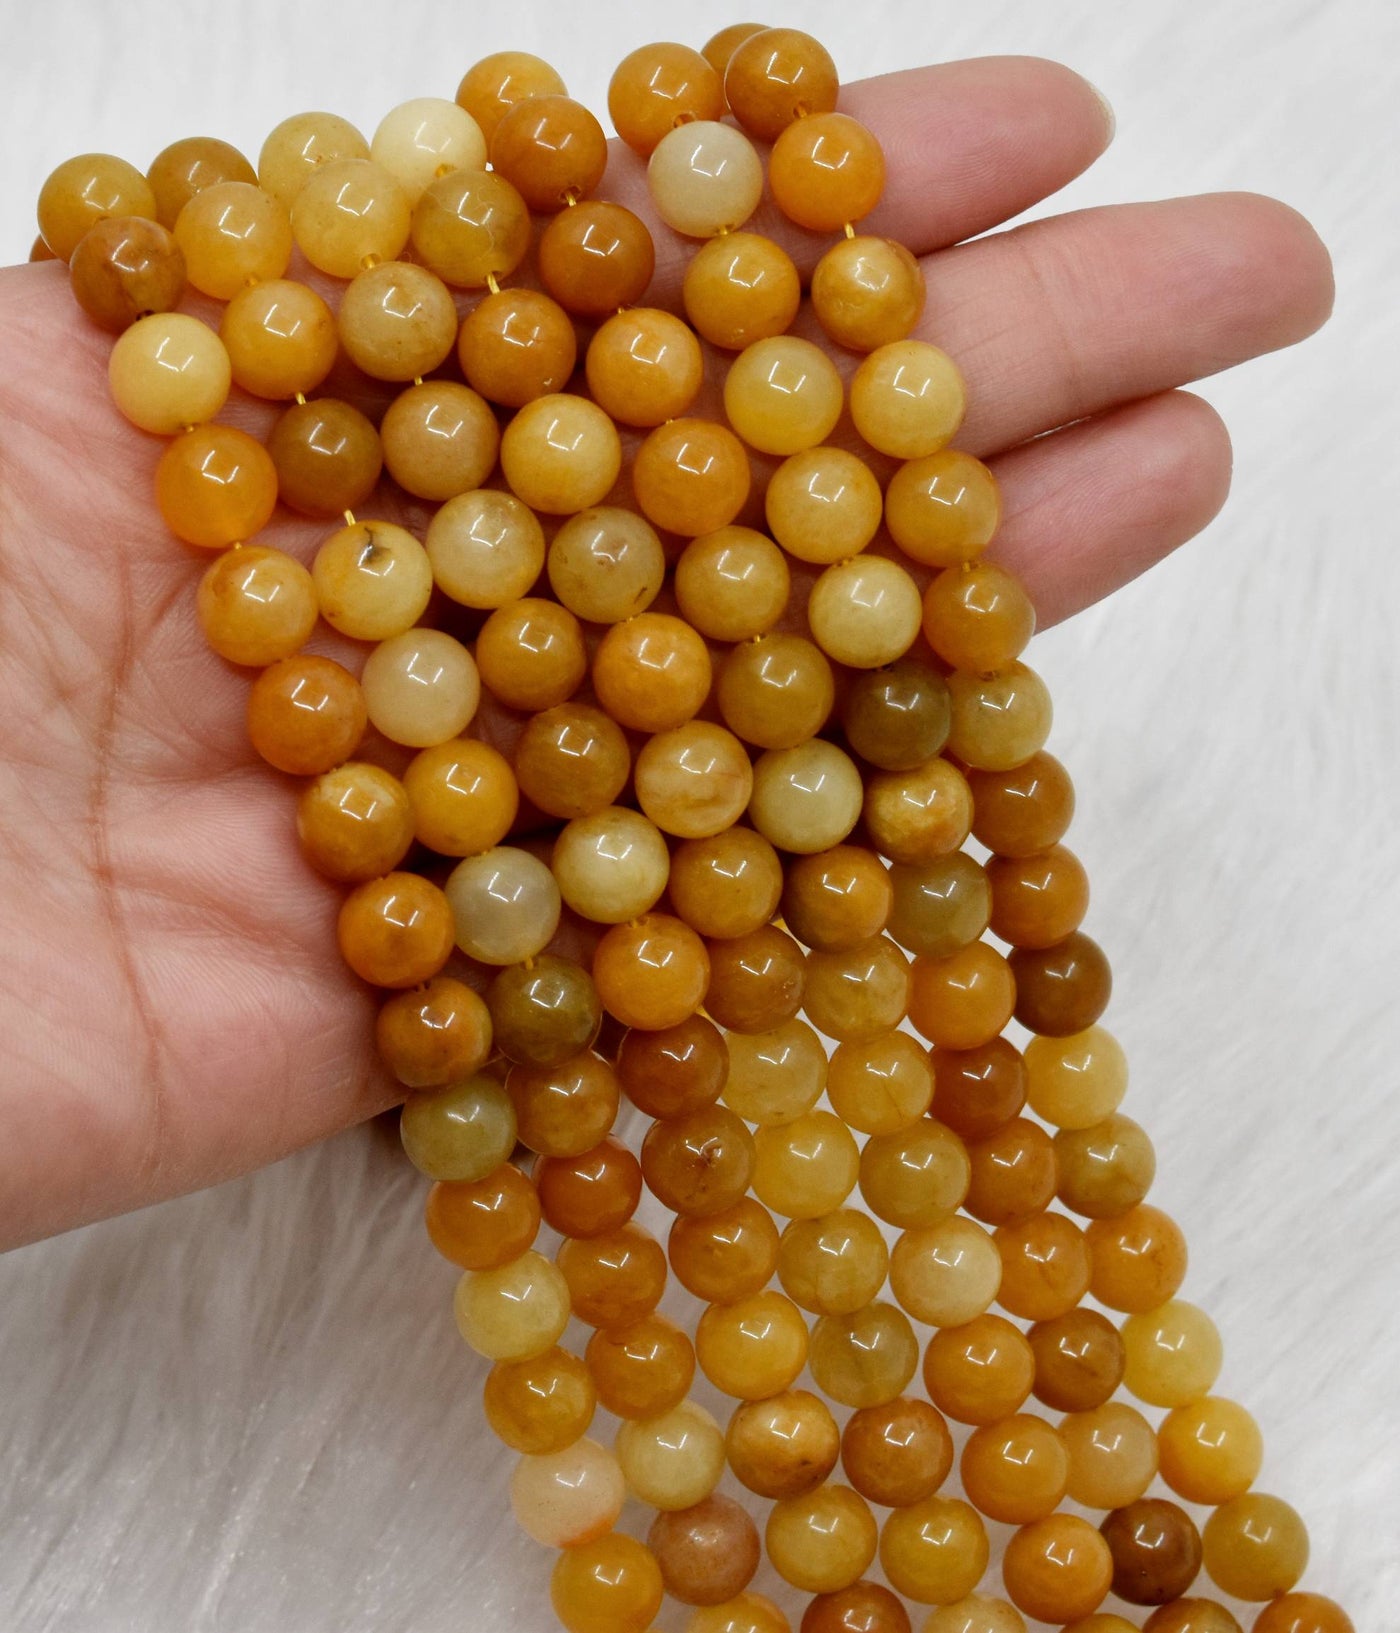 Yellow Aventurine Beads, Natural Round Crystal Beads 4mm to 10mm